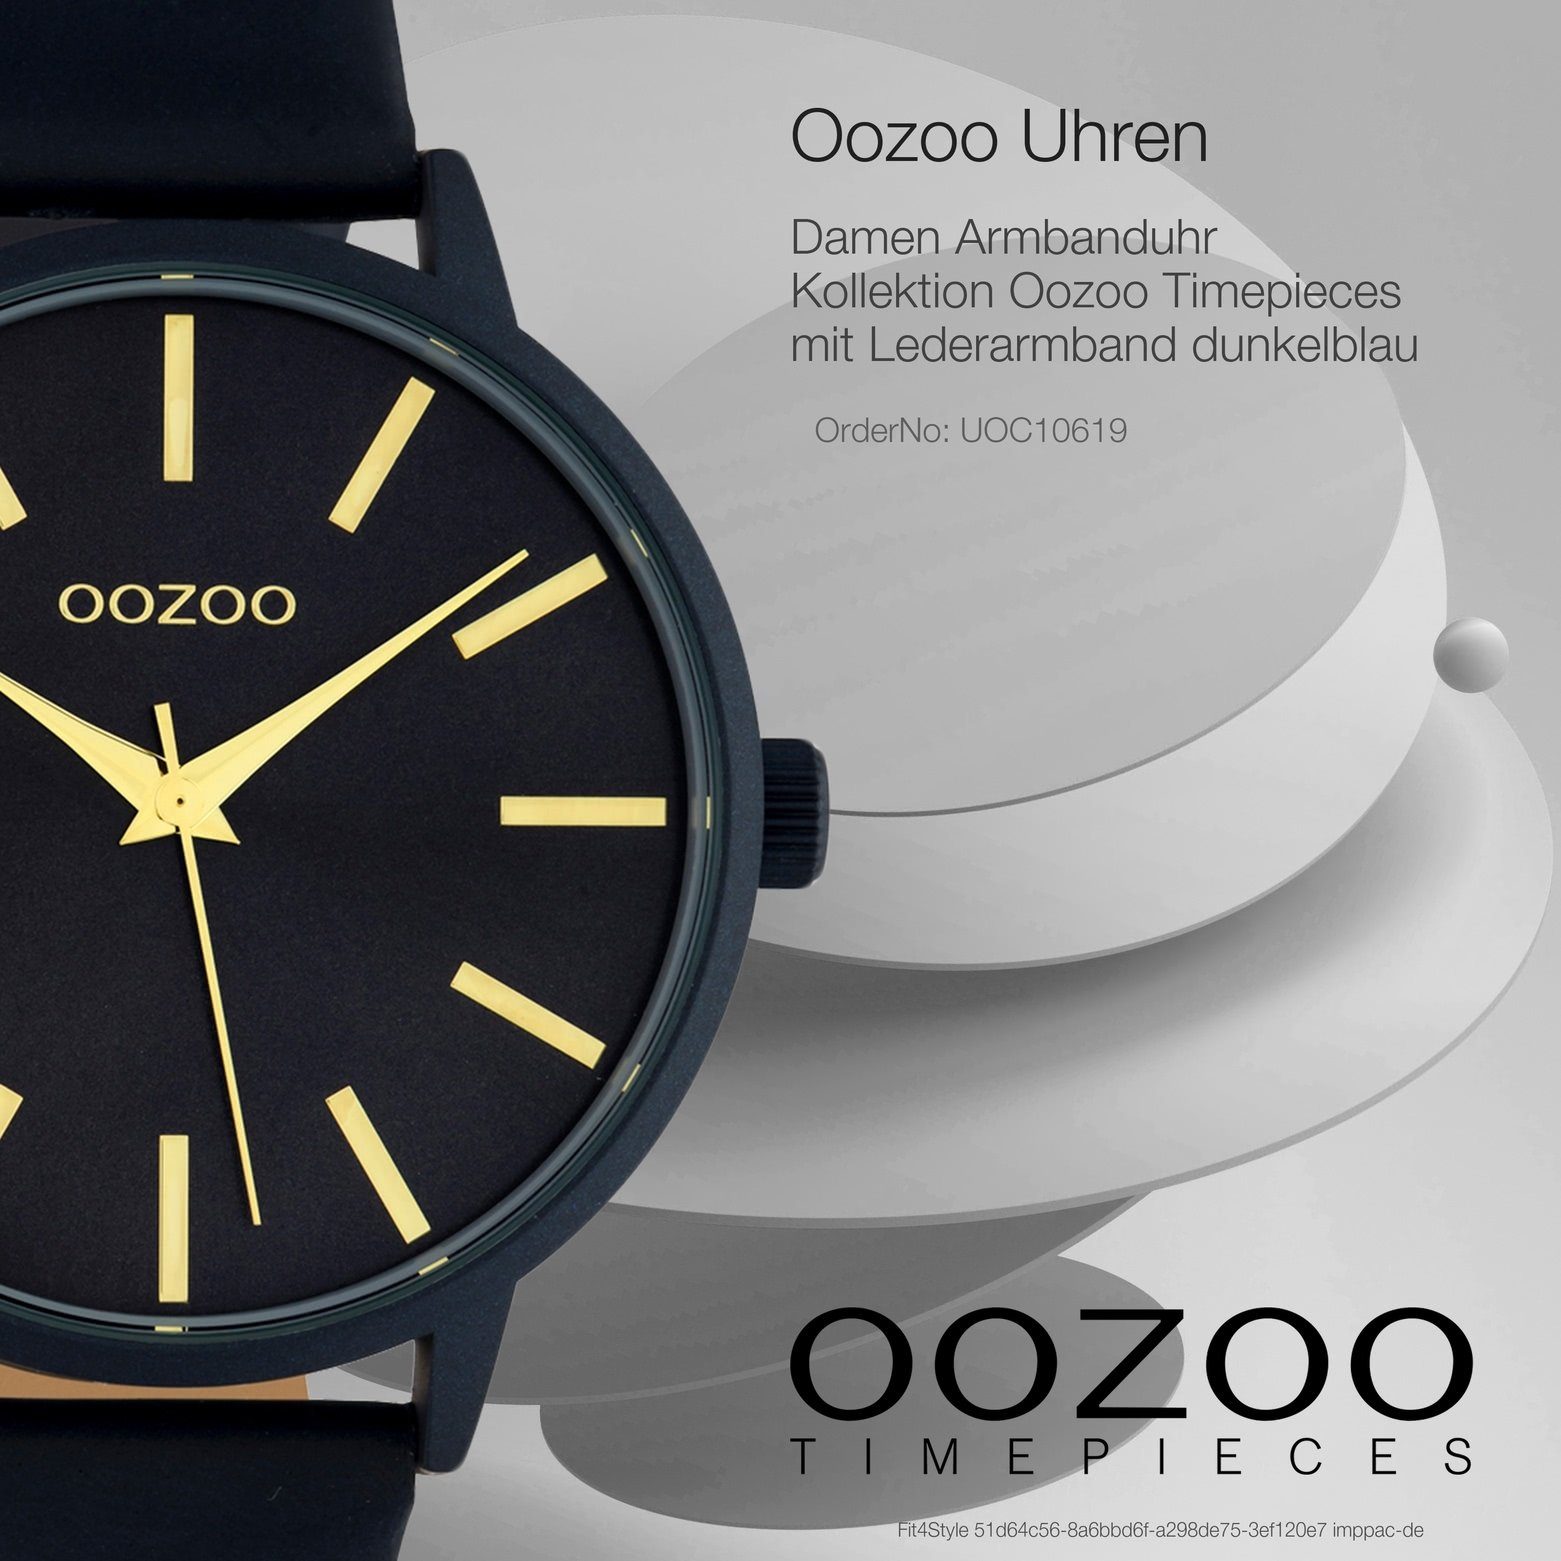 OOZOO Quarzuhr groß rund, dunkelblau 42mm) Lederarmband, Damenuhr Oozoo Damen Analog, Fashion-Style Armbanduhr (ca